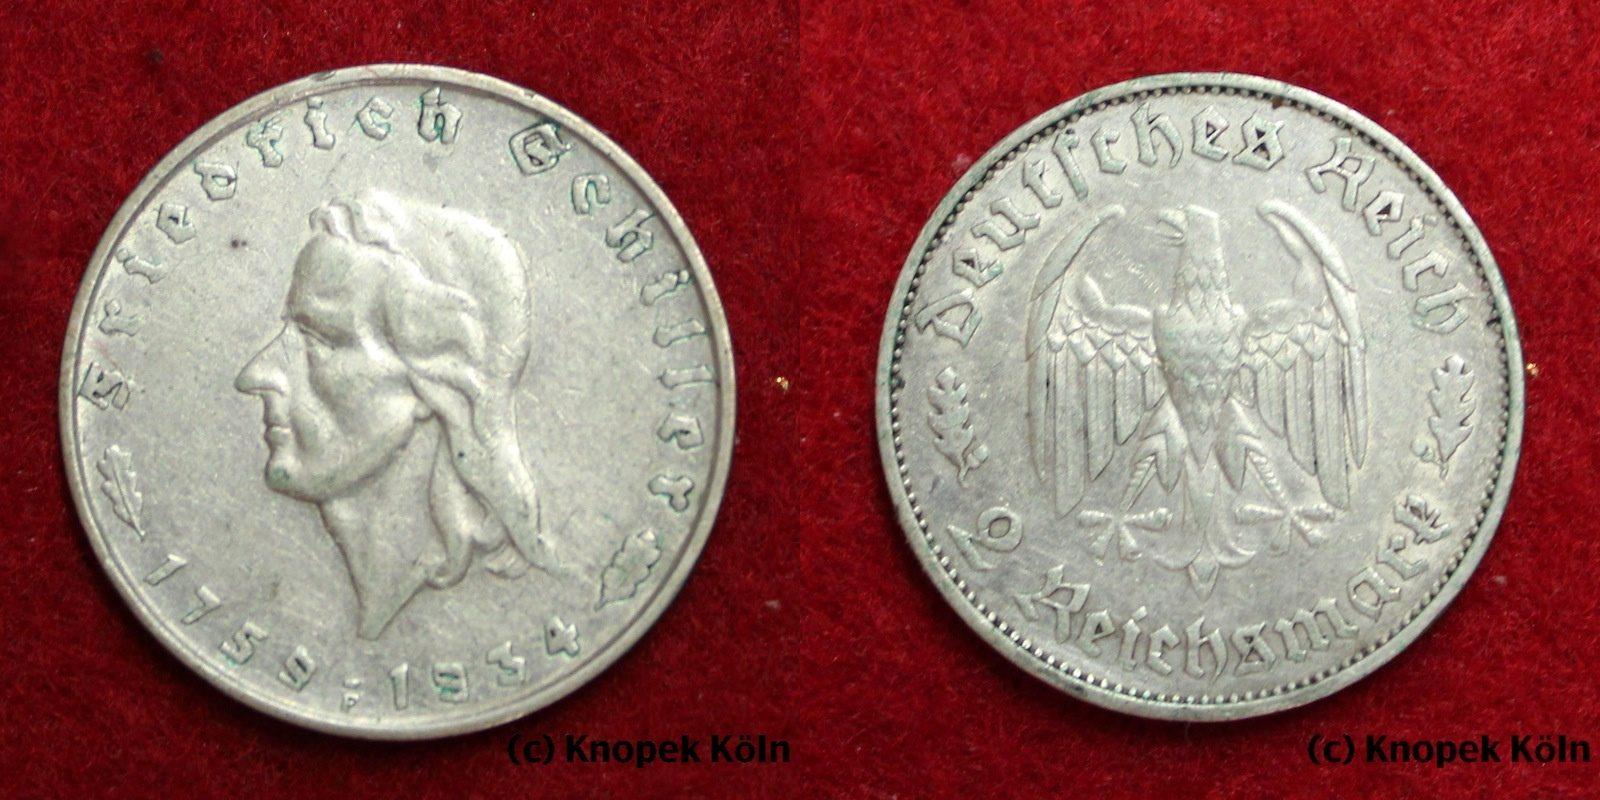 Foto Drittes Reich/3 Reich Dr 2 Reichsmark Rm 1934 F